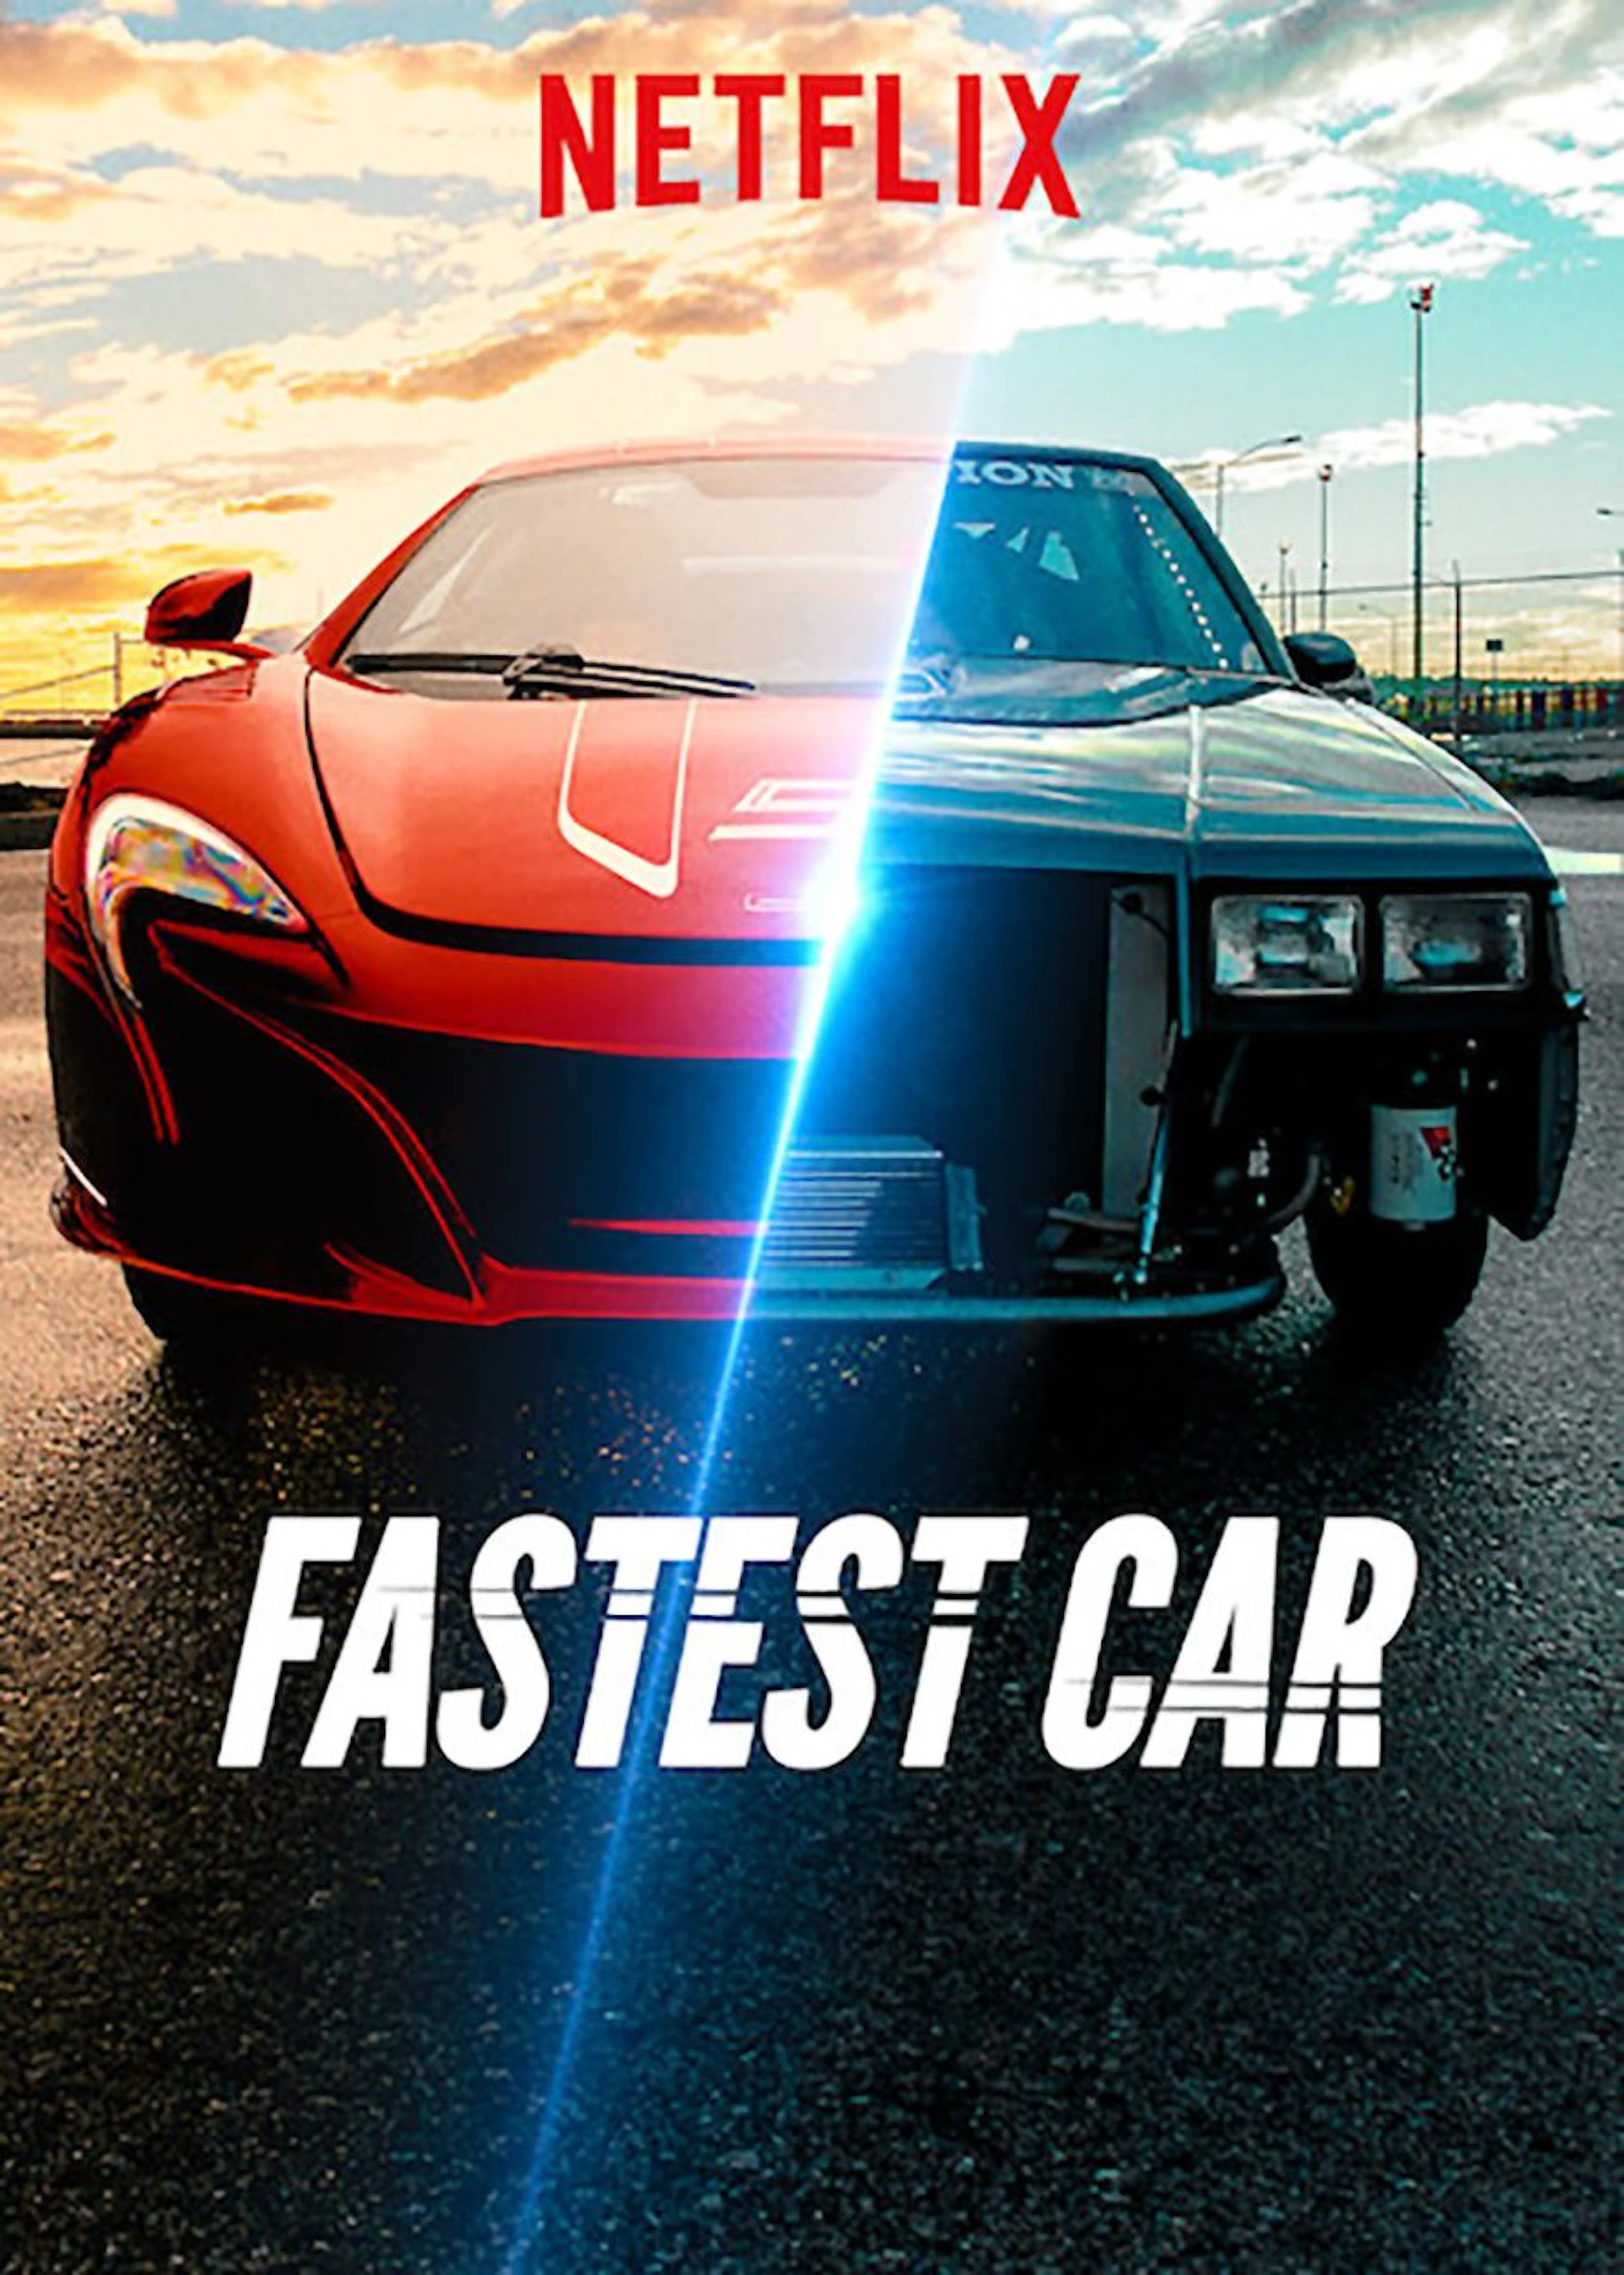 Netflix's Fastest Car - International versioning and dubbing